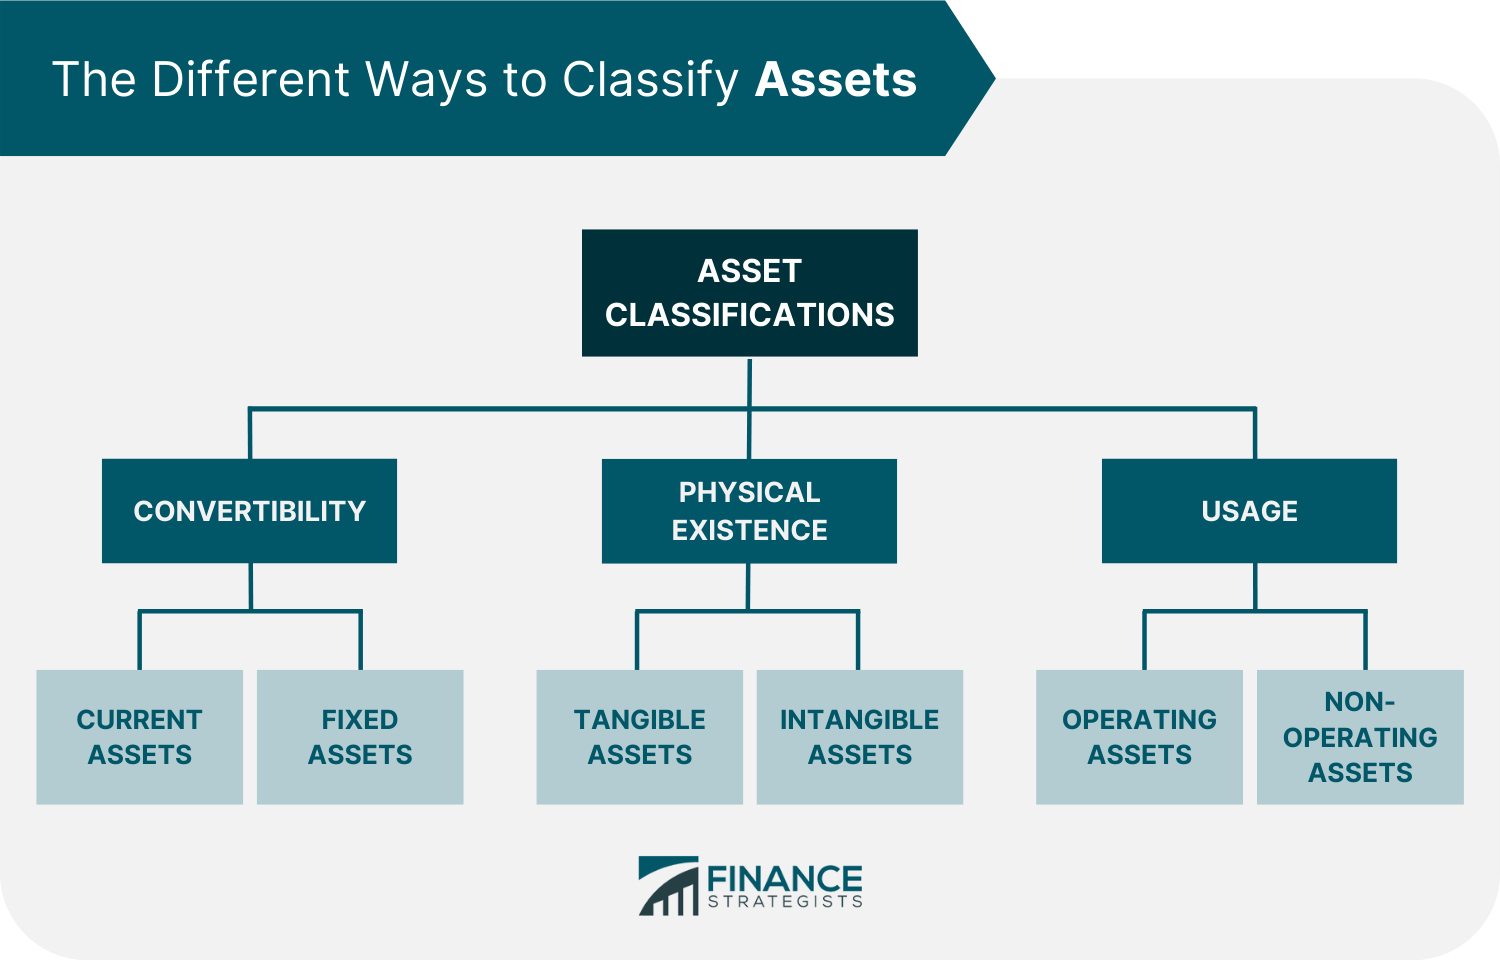 https://www.financestrategists.com/accounting/operating-assets/assets/